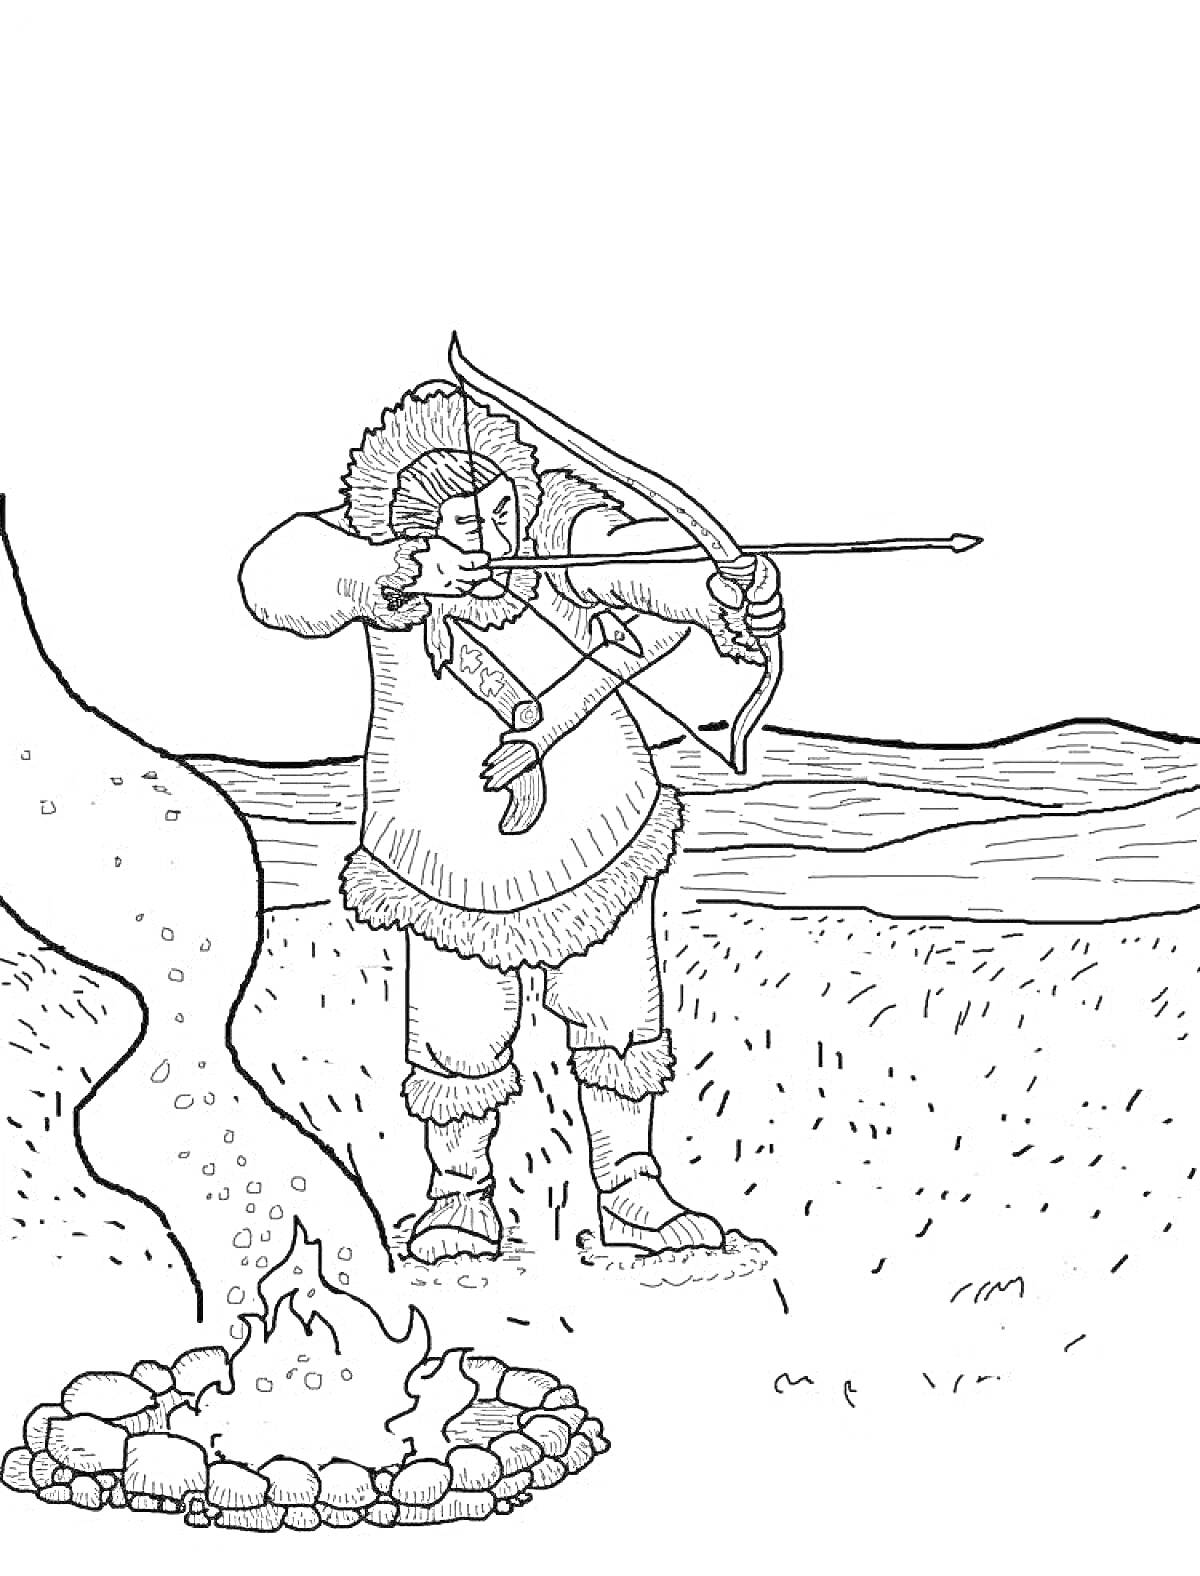 Охотник с луком возле костра на фоне пейзажа